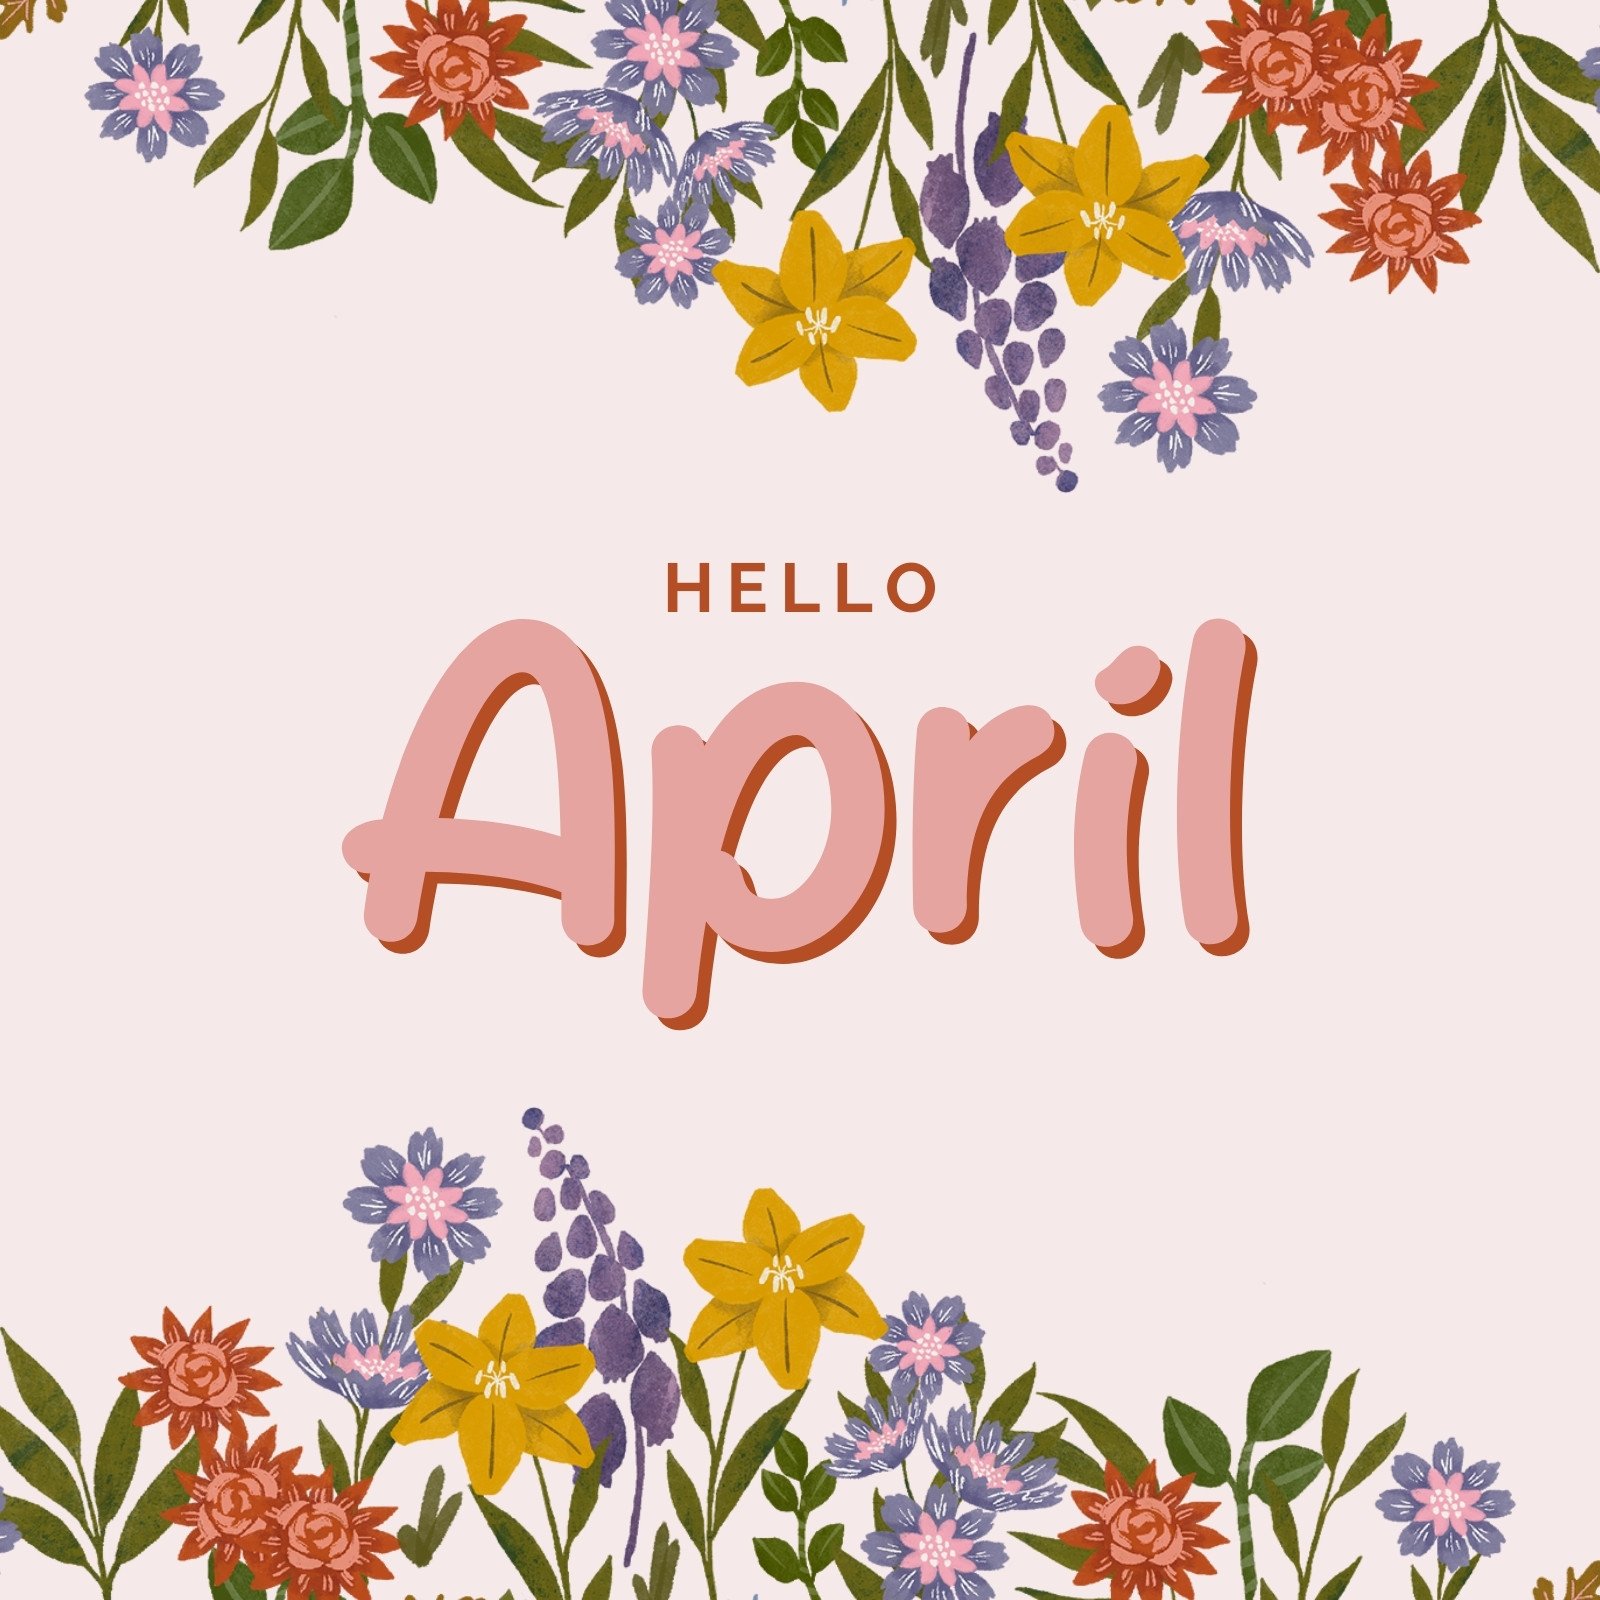 Free and customizable april templates